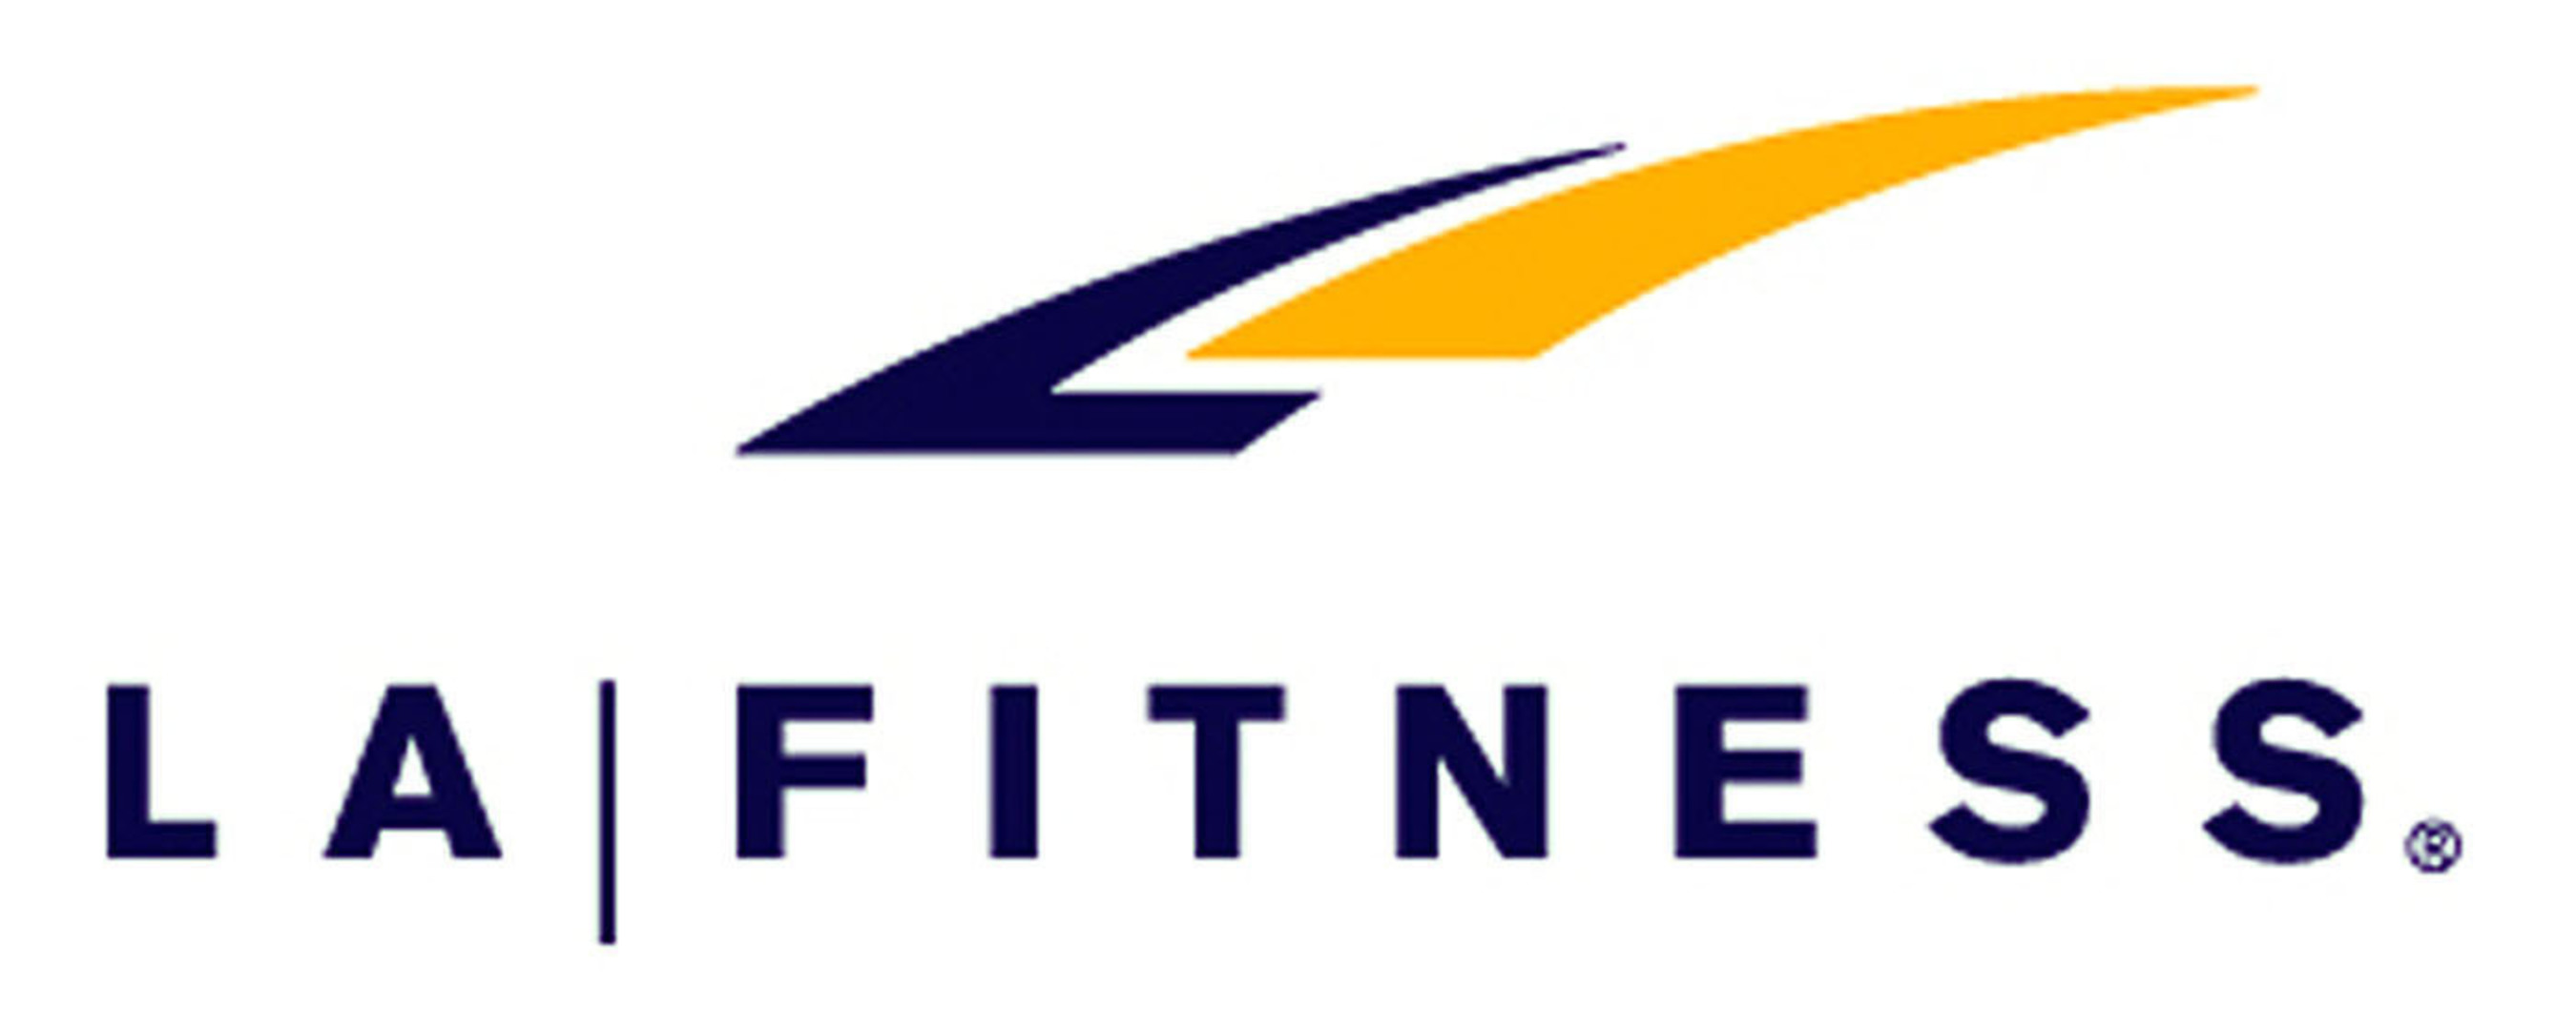 LA Fitness Opens New Signature Club in Rockville, MD